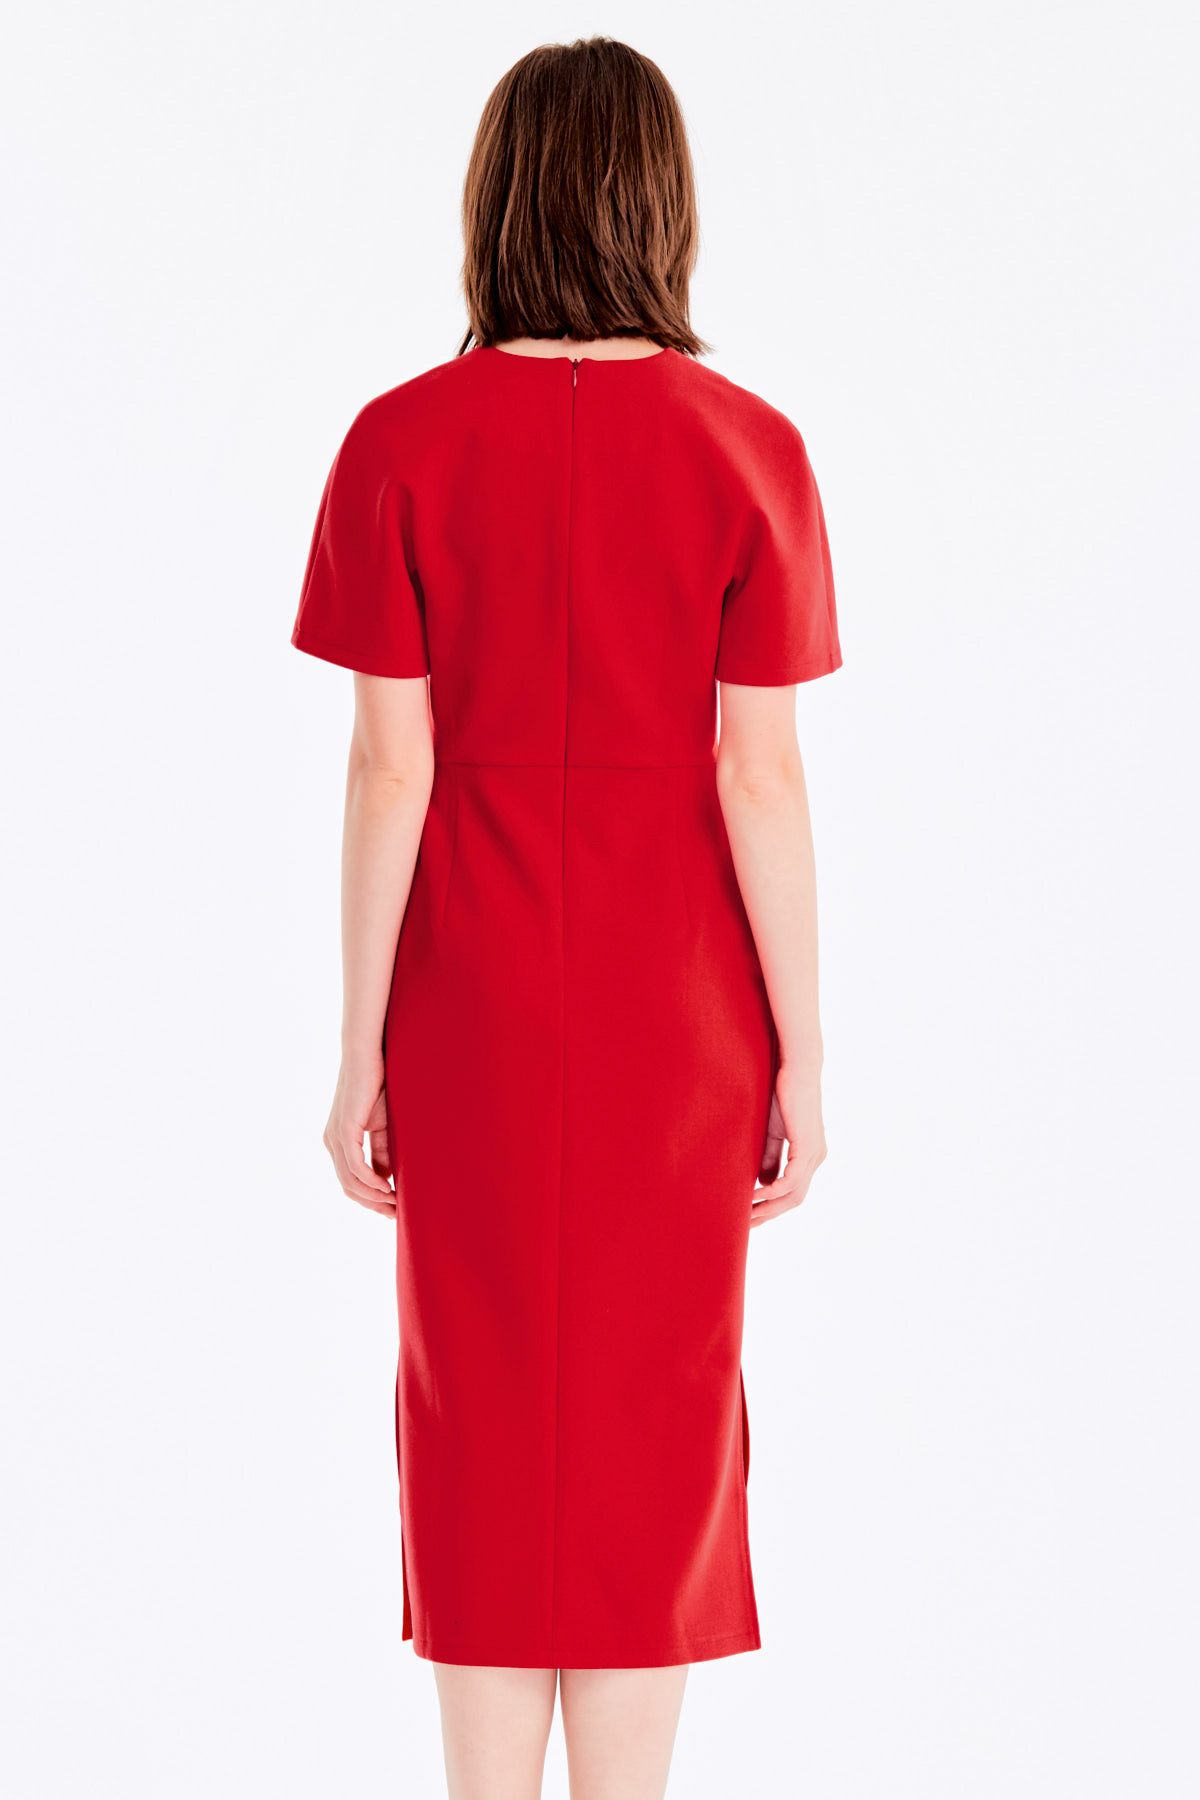 V-neck red dress with slits  , photo 5